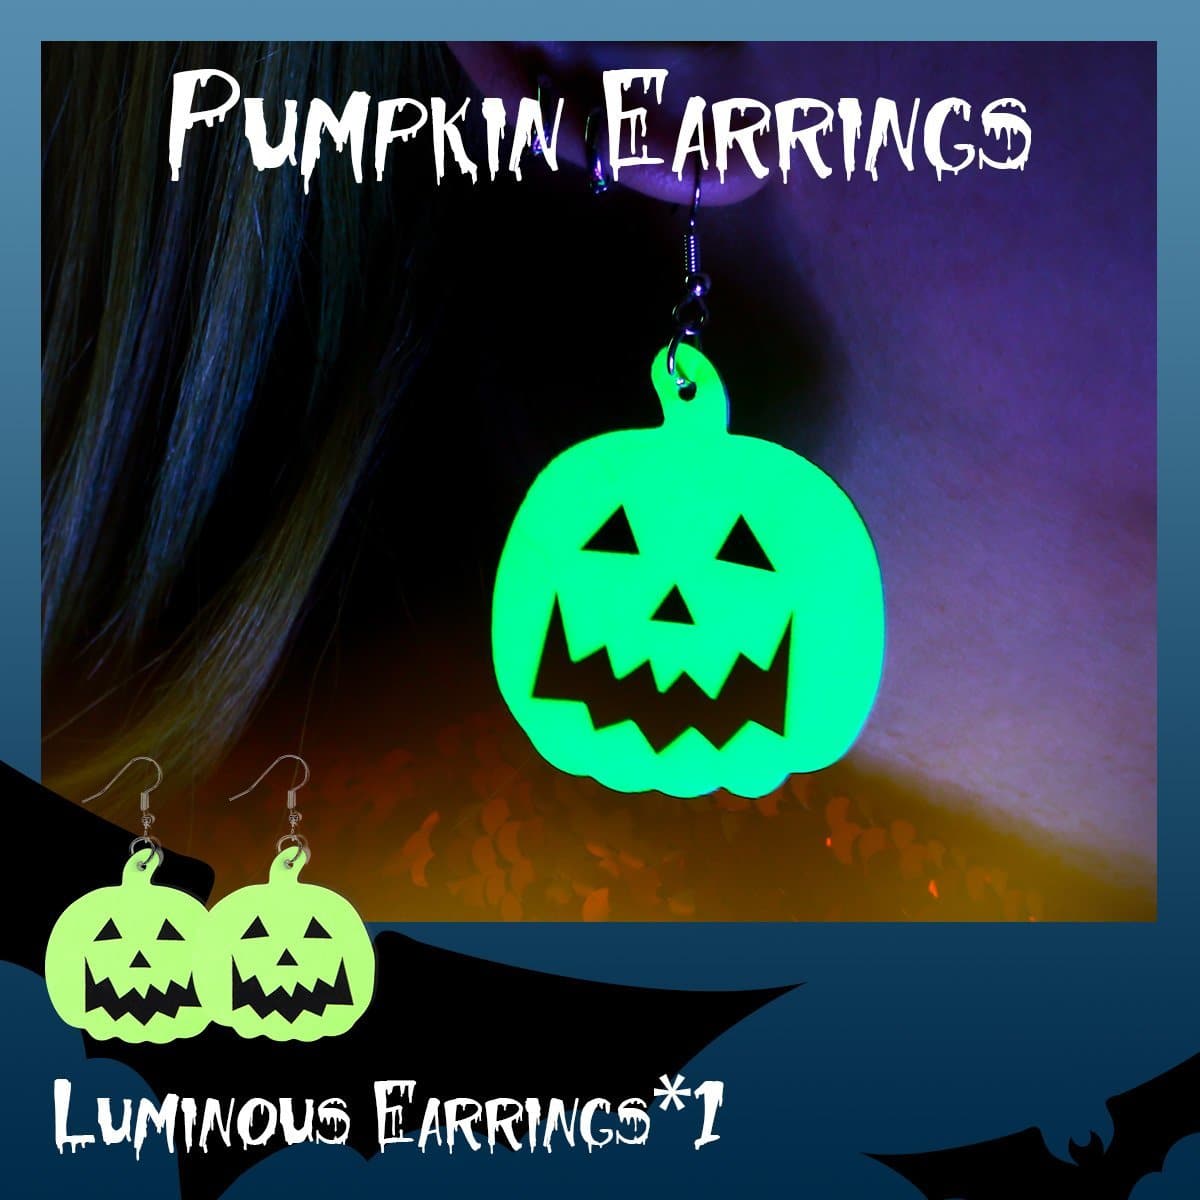 Pumpkin Duchess & Flickering Ghosts - Dipping Powder Kit - MODELONES.com